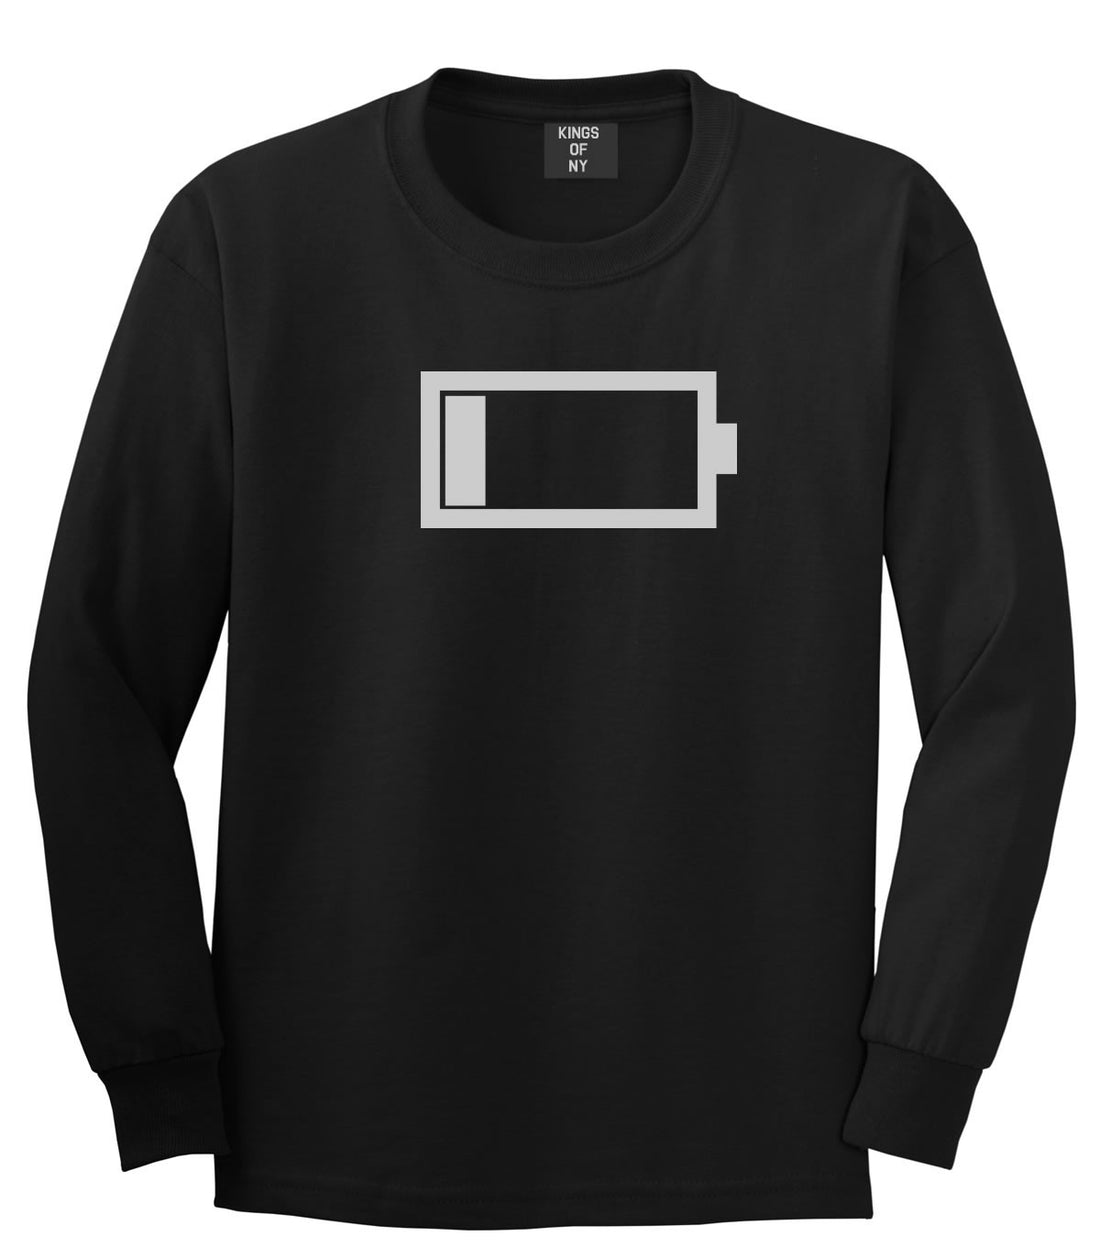 Low Battery Cell Phone Meme Emoji Long Sleeve T-Shirt